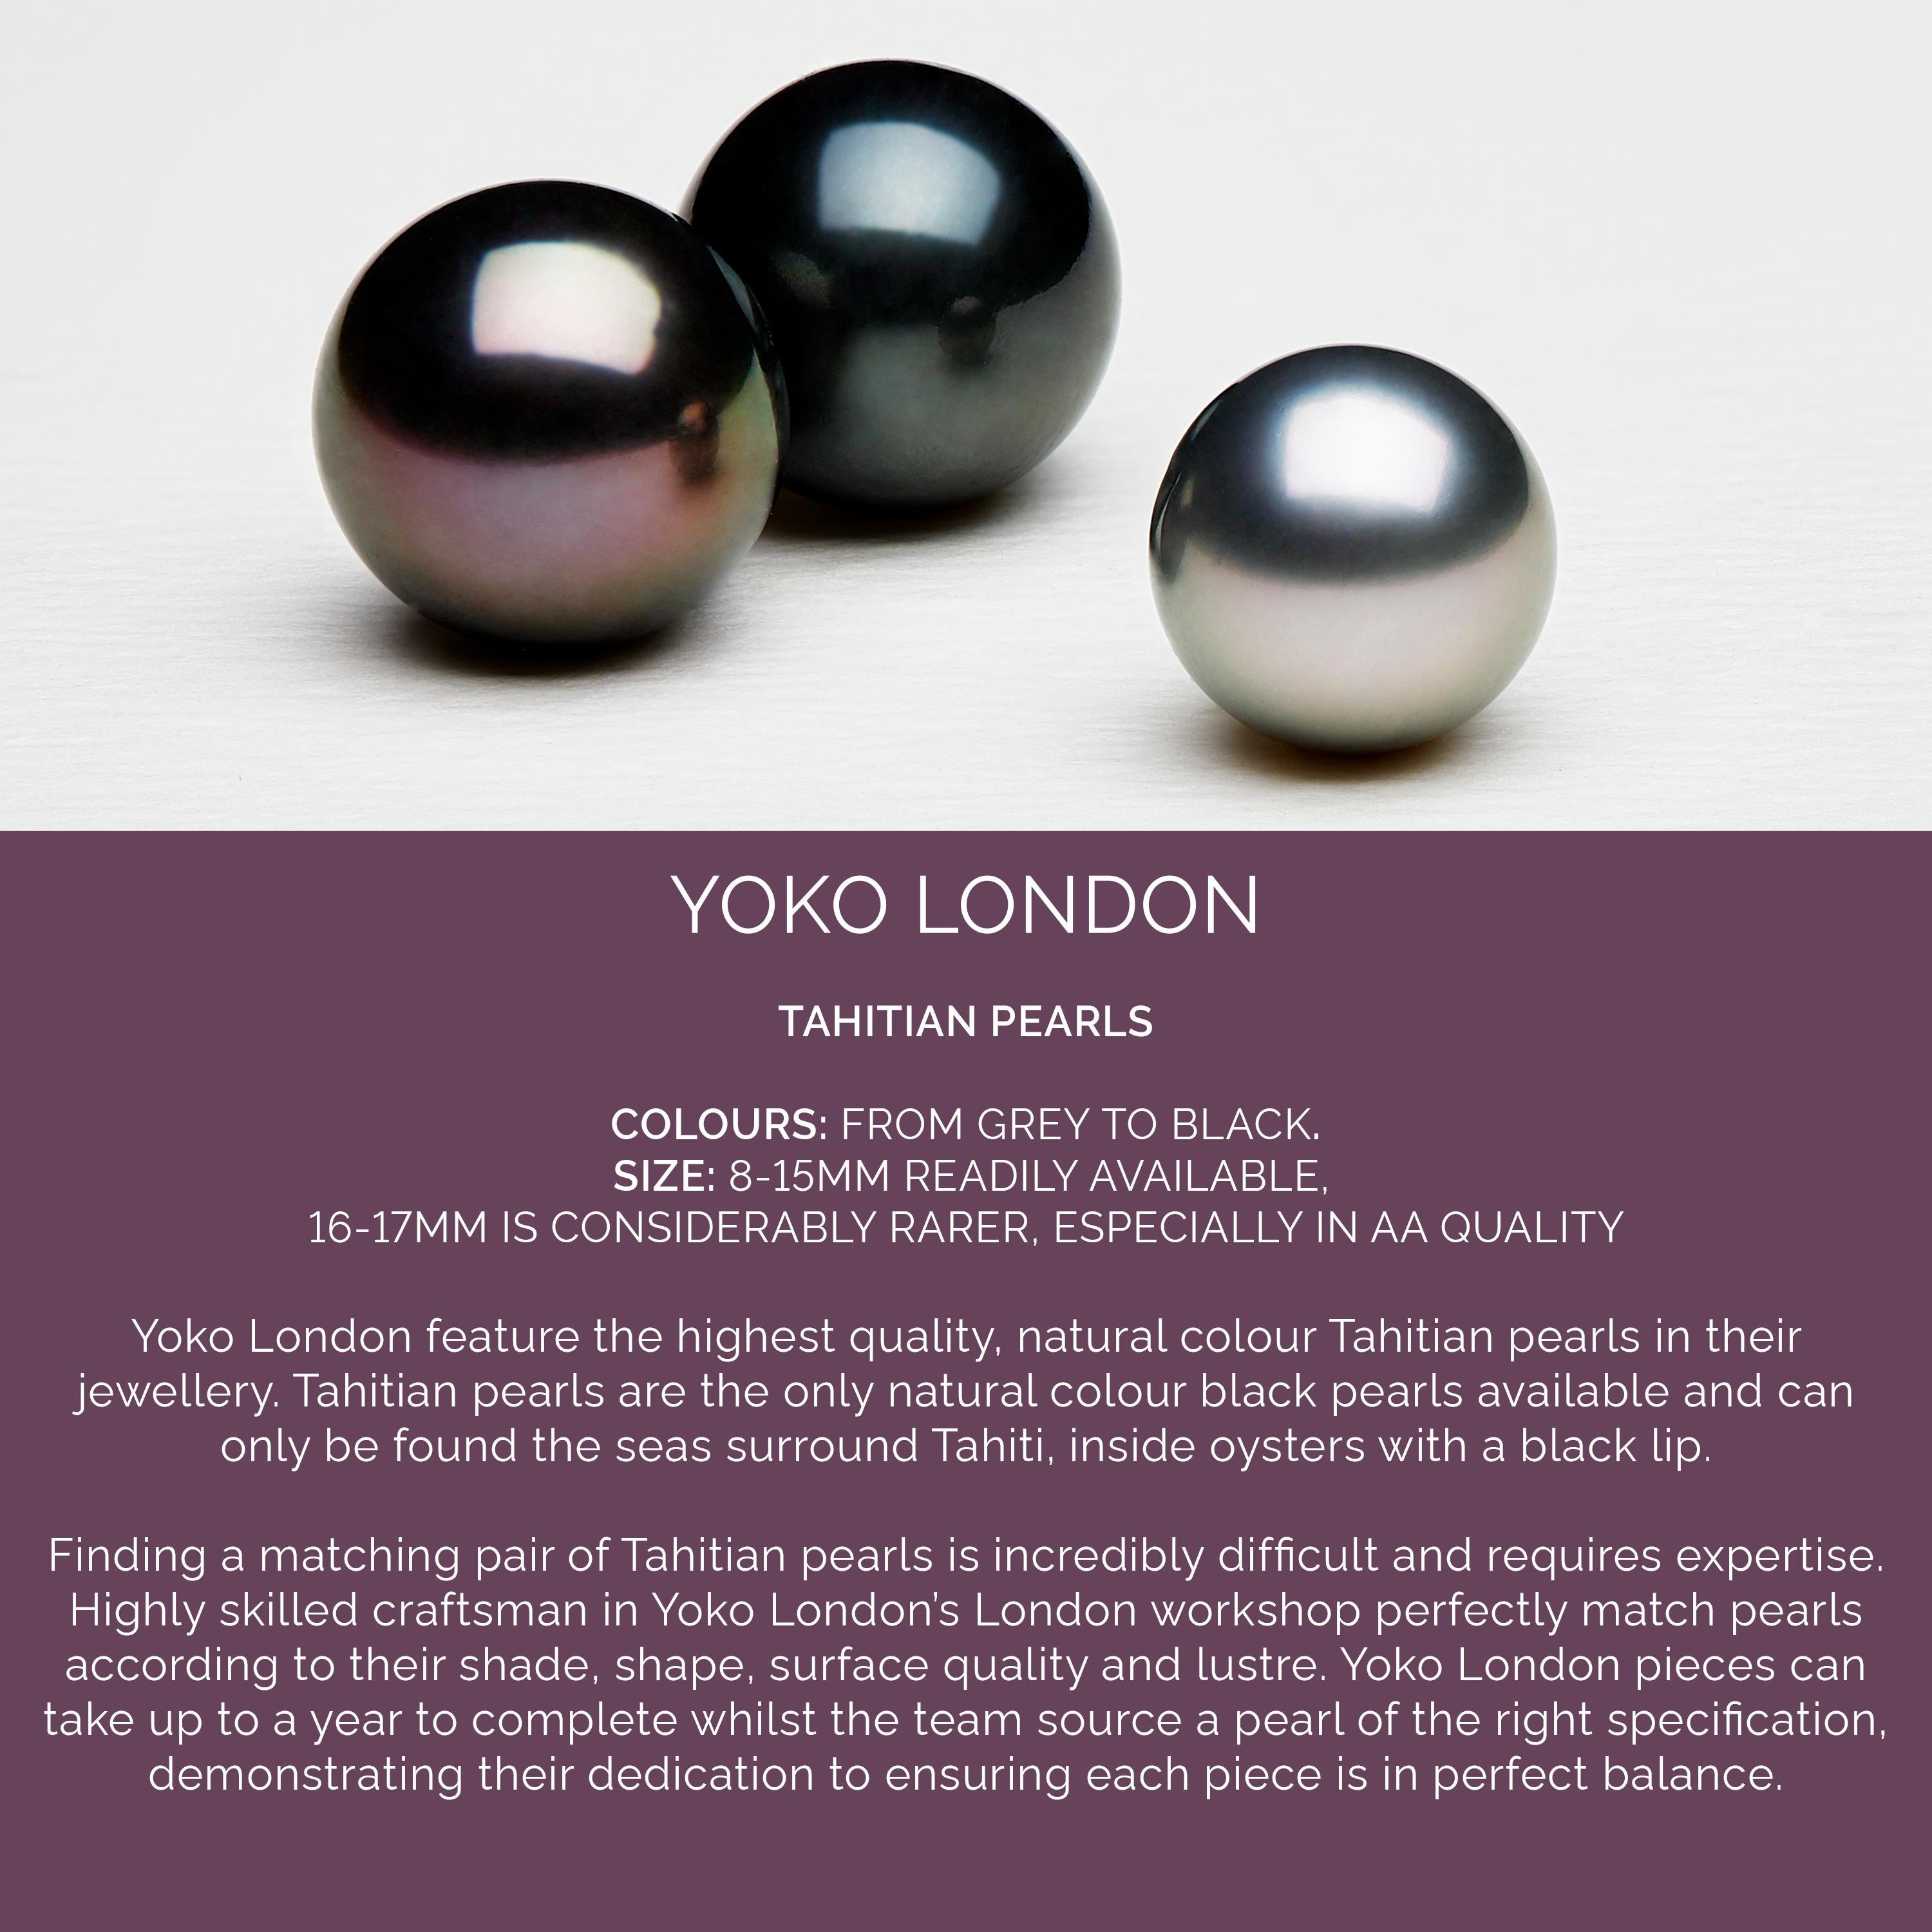 Women's Yoko London Tahitian Pearl and Diamond Earrings in 18k White and Black Gold